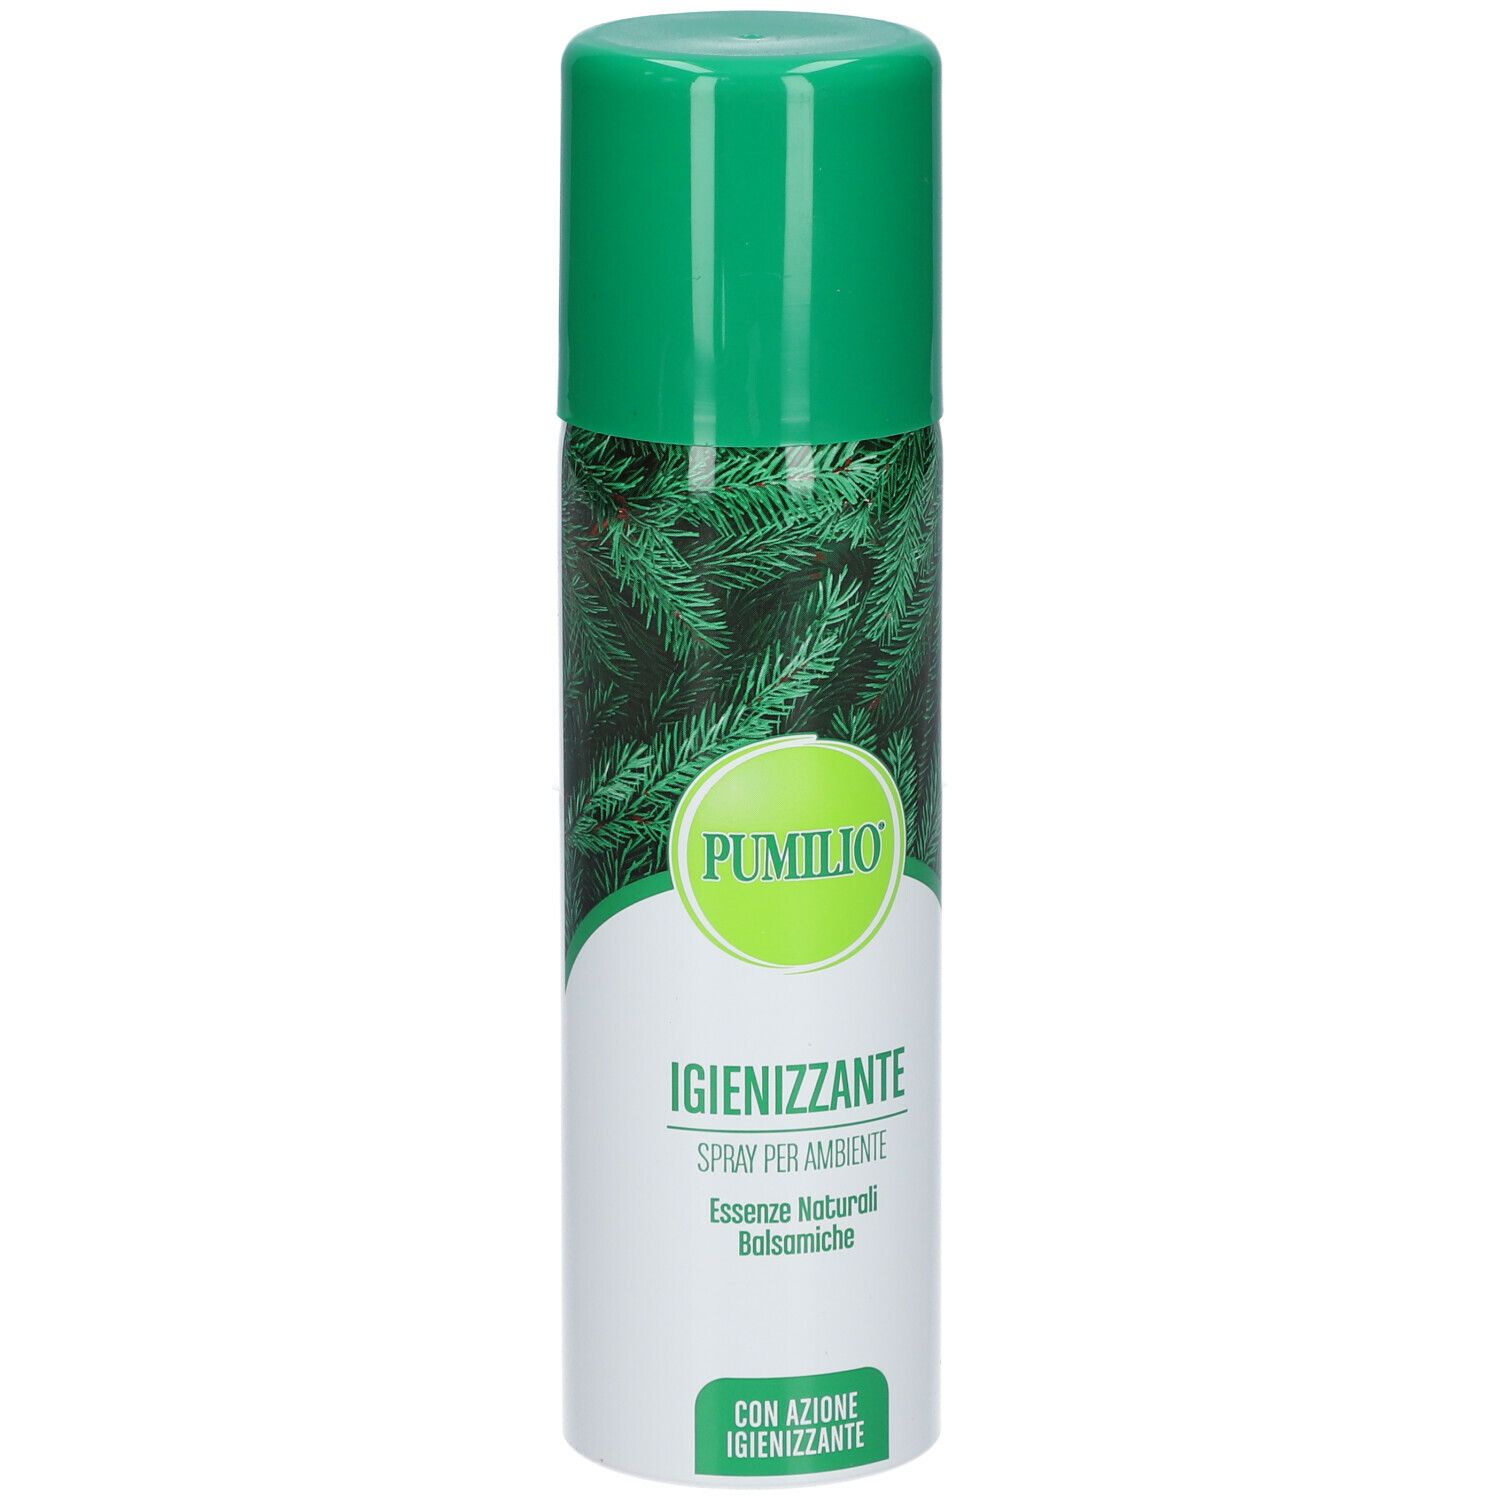 Pumilio® Igienizzante Spray per Ambiente 200 ml